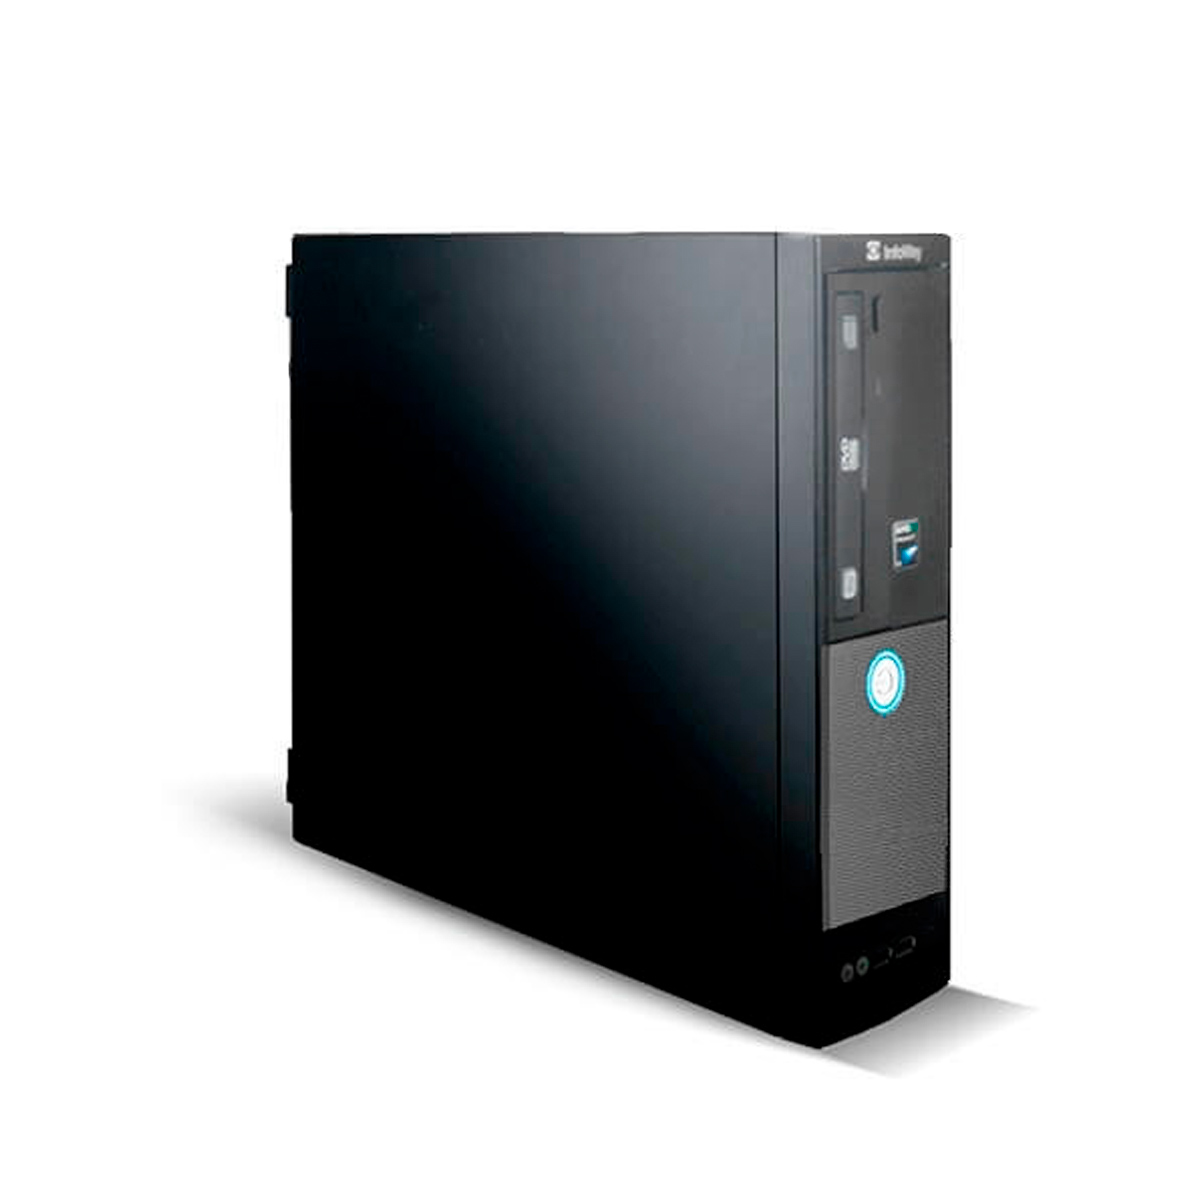 Computador Itautec Infoway SM 3322 - AMD Phenom Z550, 4GB, HD 320GB, DVD, Windows 7 Pro - Garantia 1 ano - Seminovo